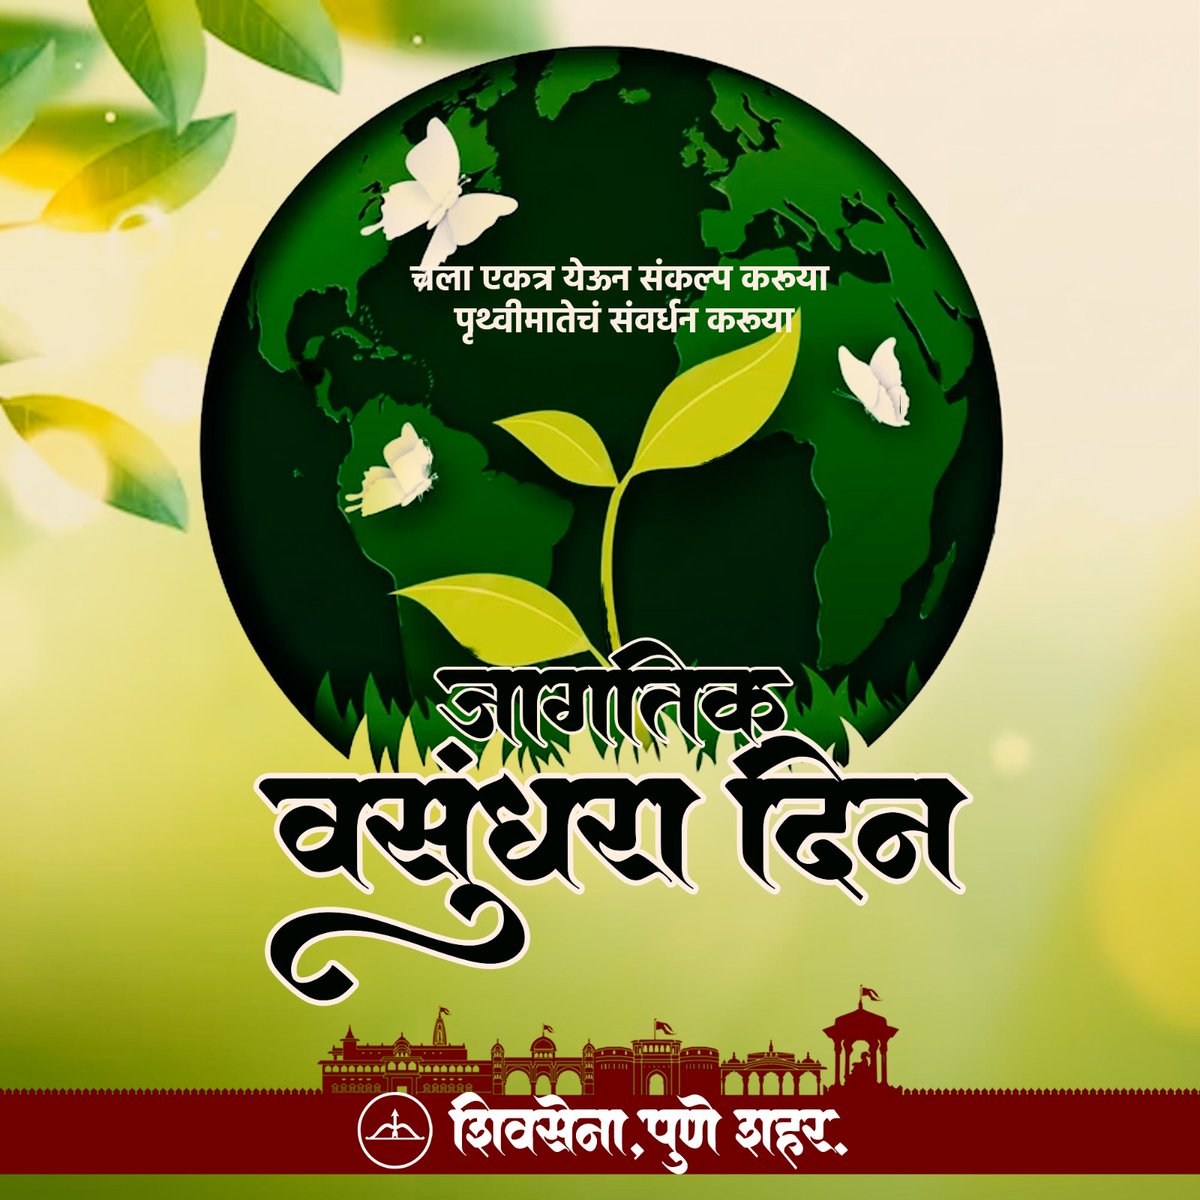 पर्यावरणाचे संरक्षण करूया..!!

#savetrees #environment #plantatree #forestry #treesarelife #lovetrees #planttrees🌱